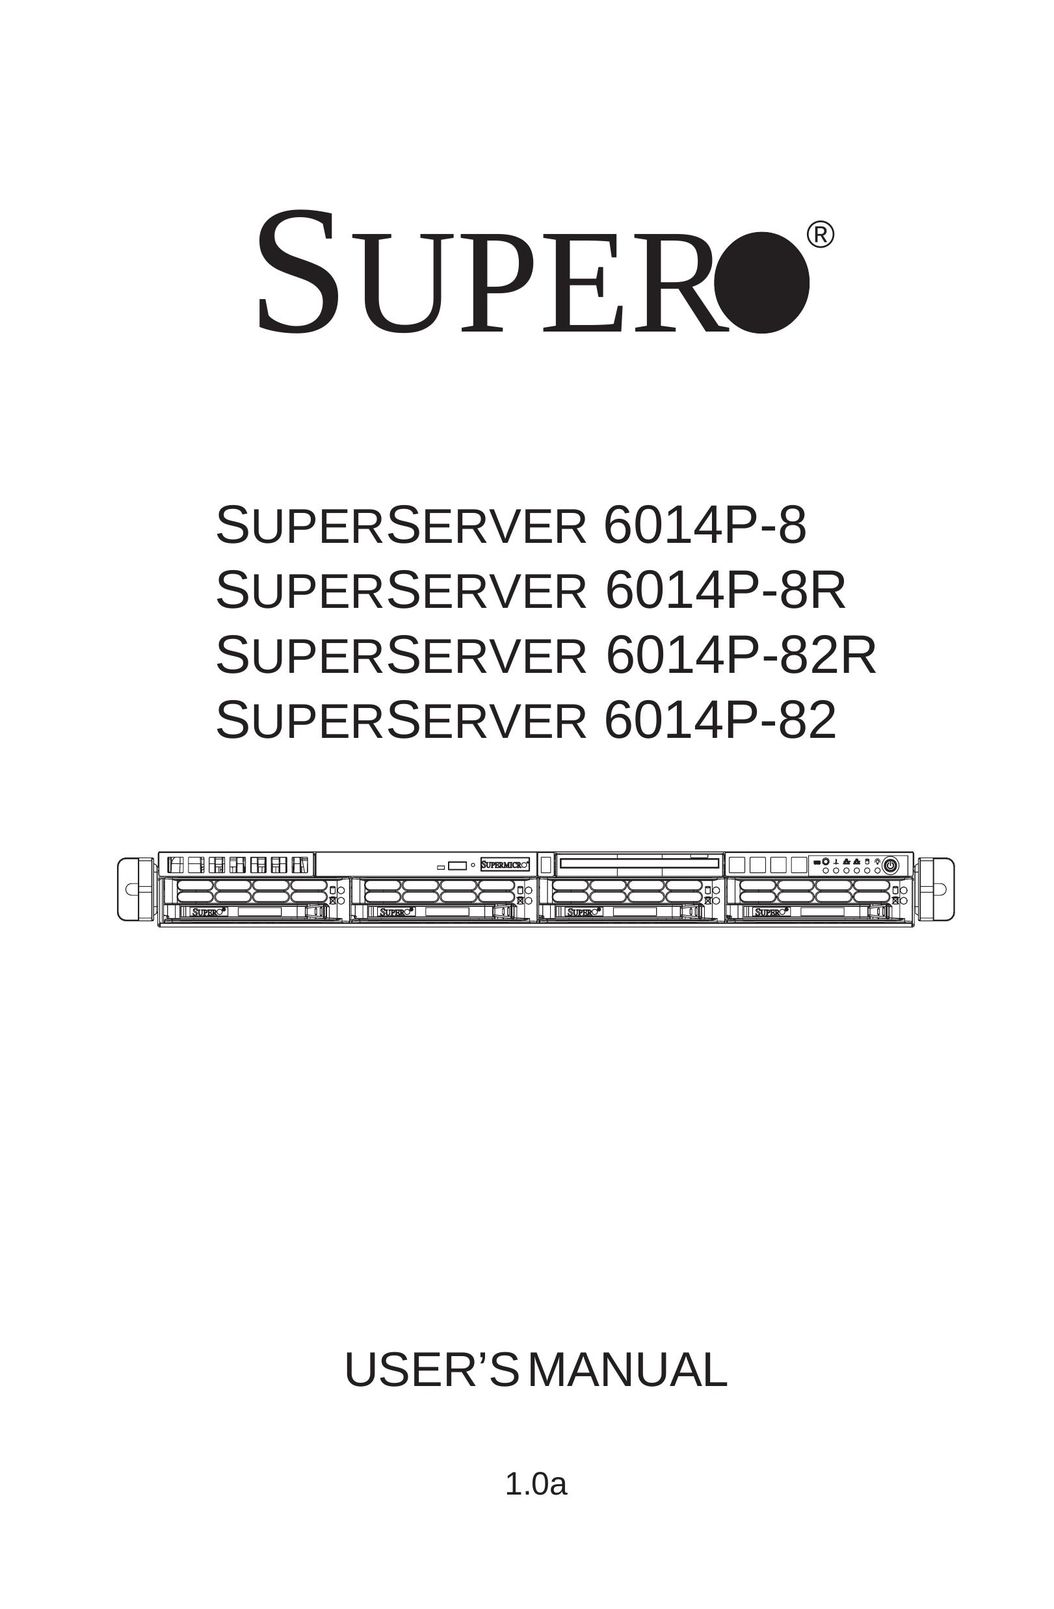 SUPER MICRO Computer 6014P-8R Home Theater Server User Manual